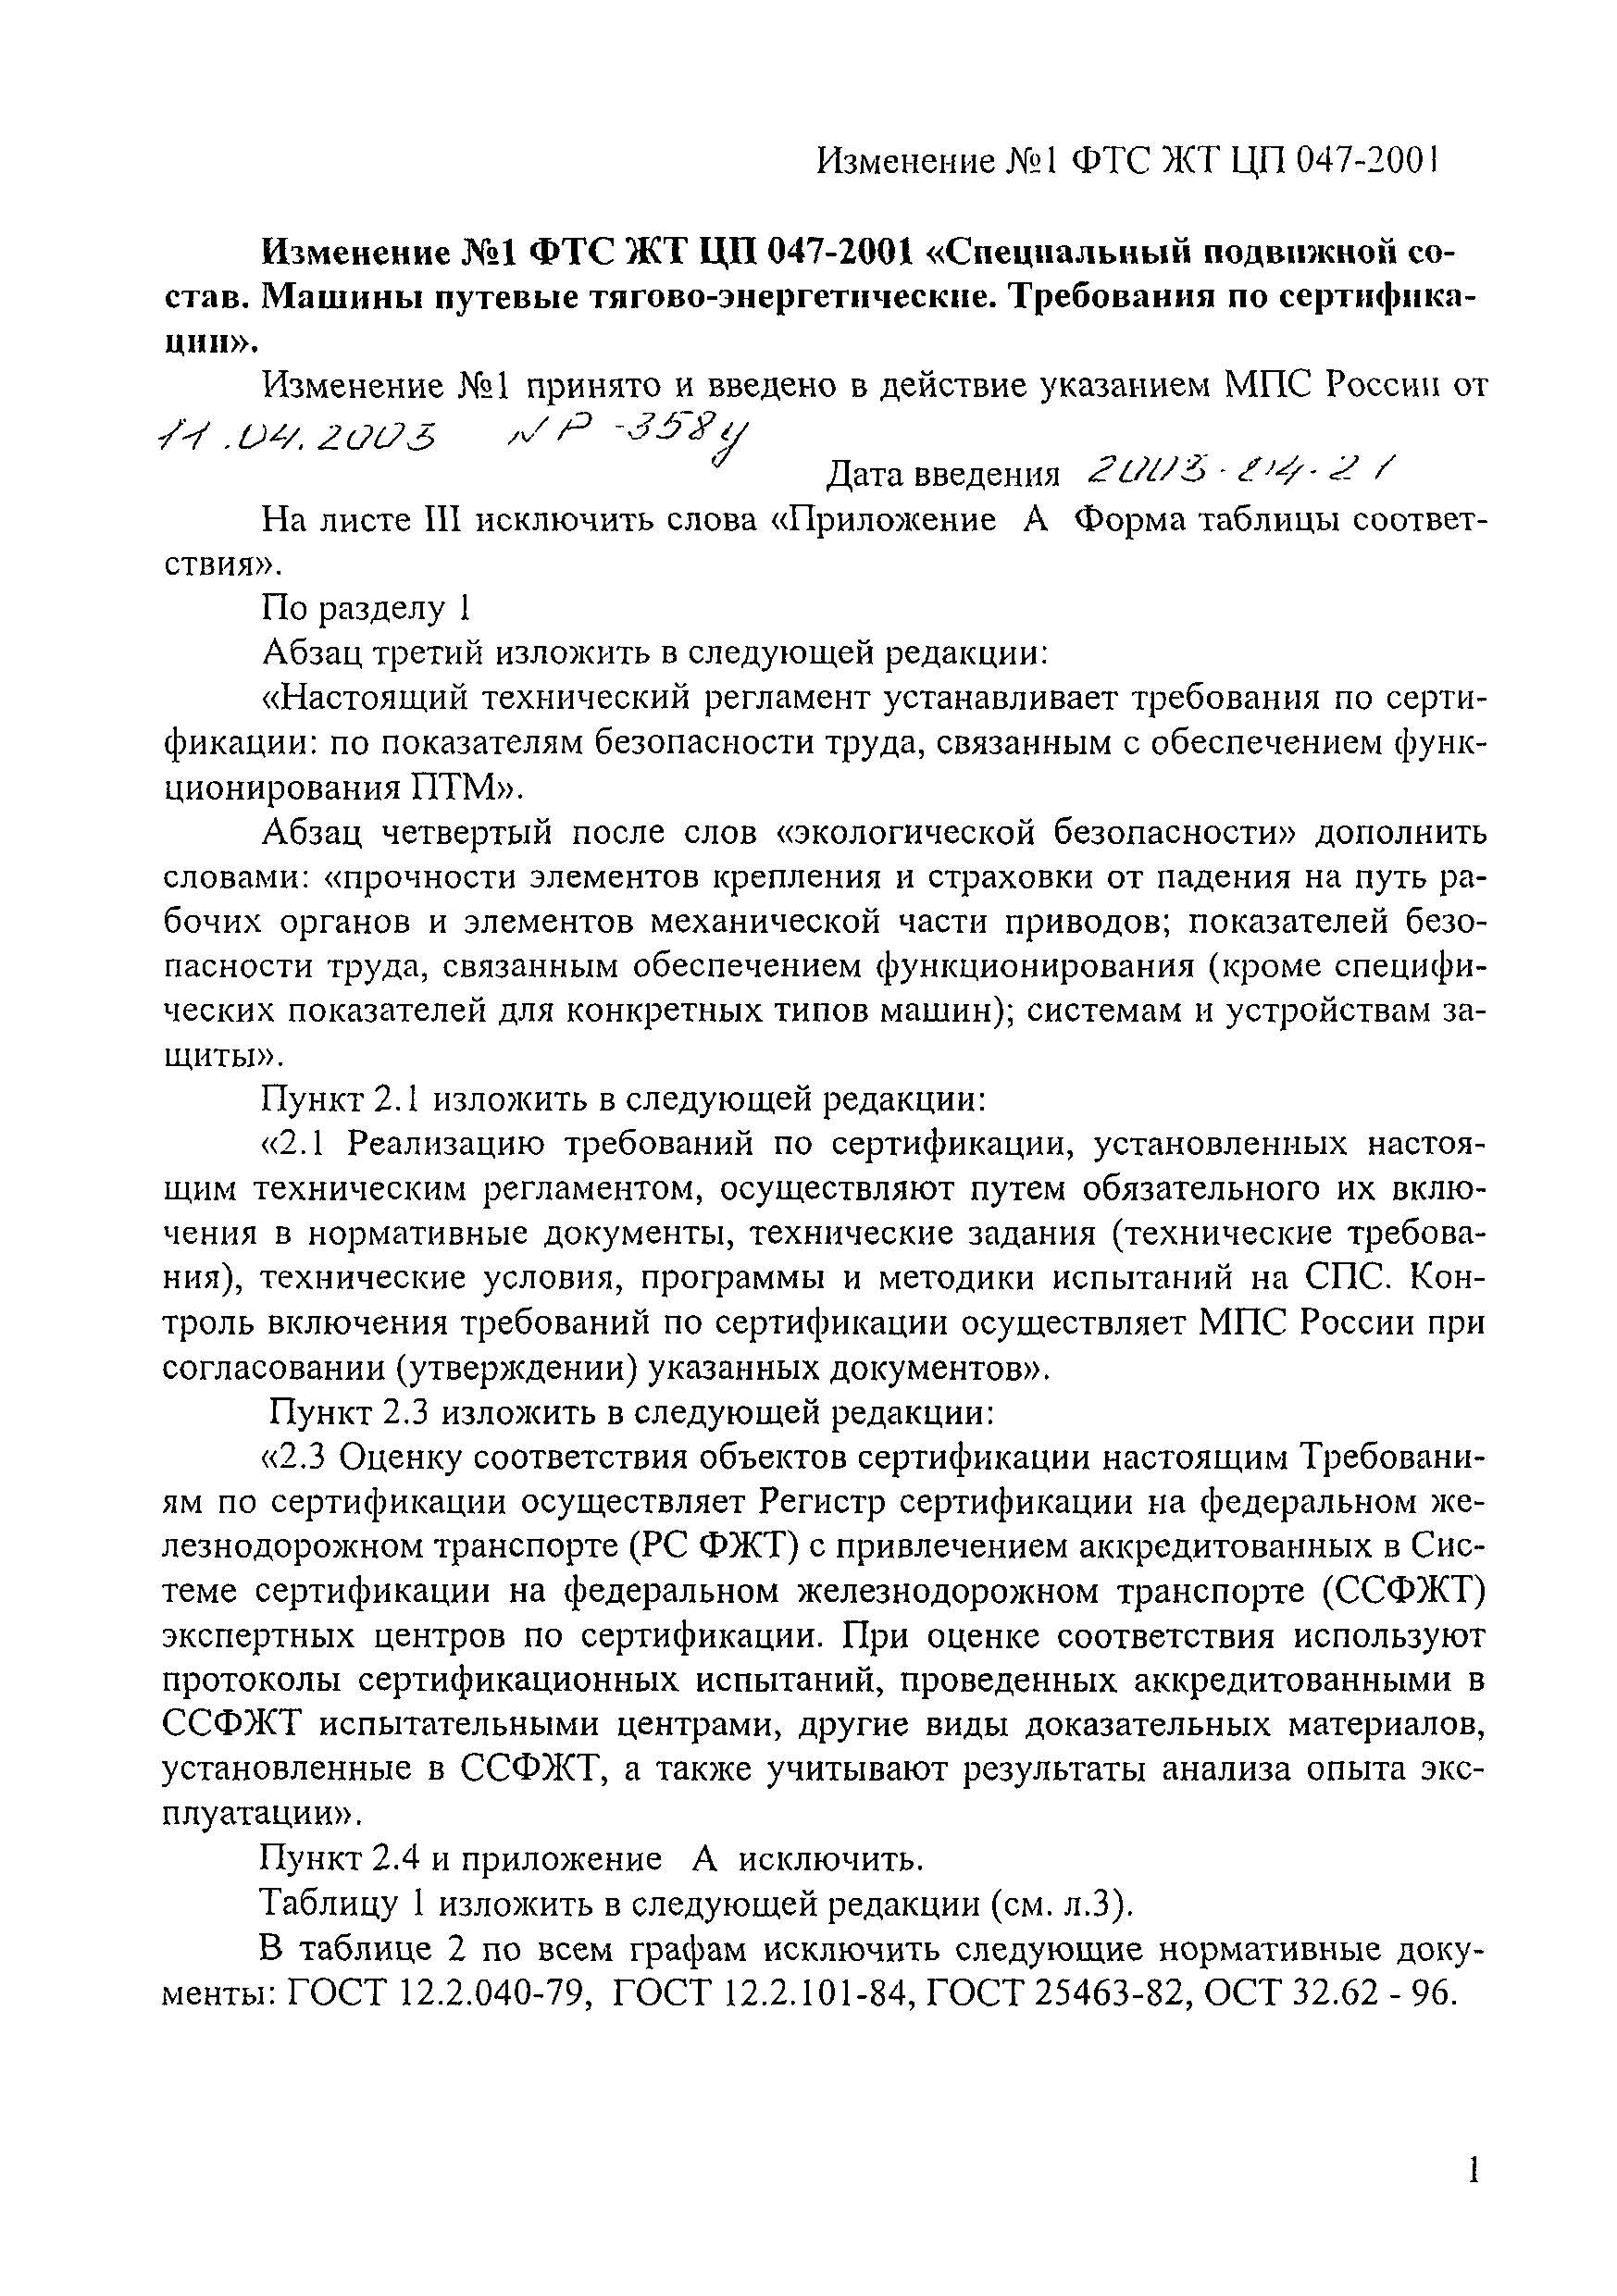 ФТС ЖТ ЦП 047-2001